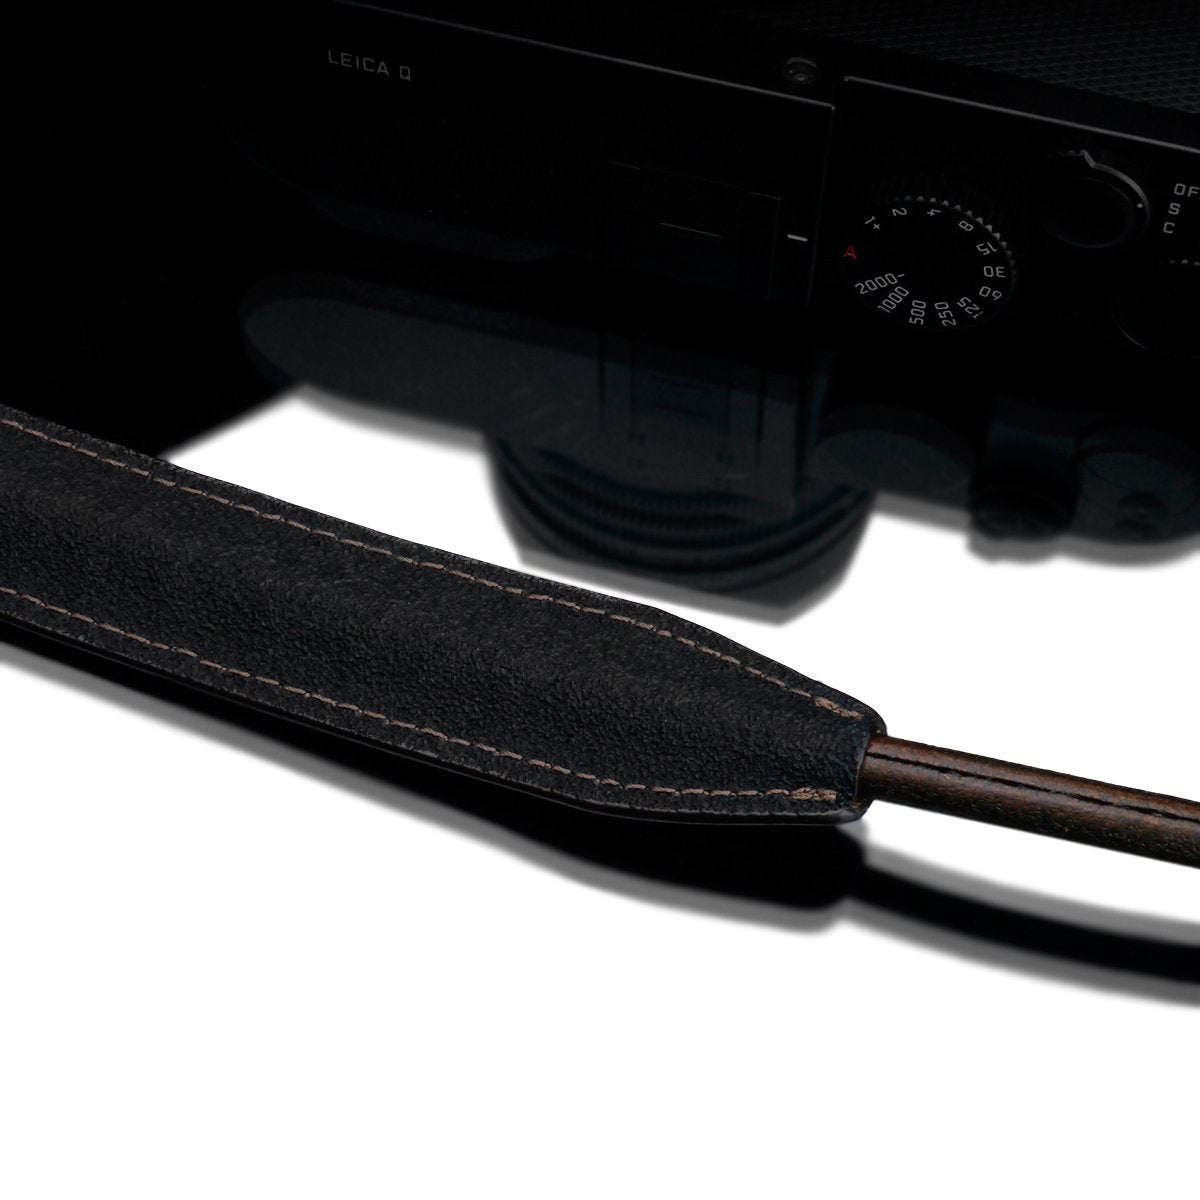 Gariz XS-CSNSBR Small Size 80cm Genuine Leather Camera Neck Strap for Mirrorless Cameras Brown